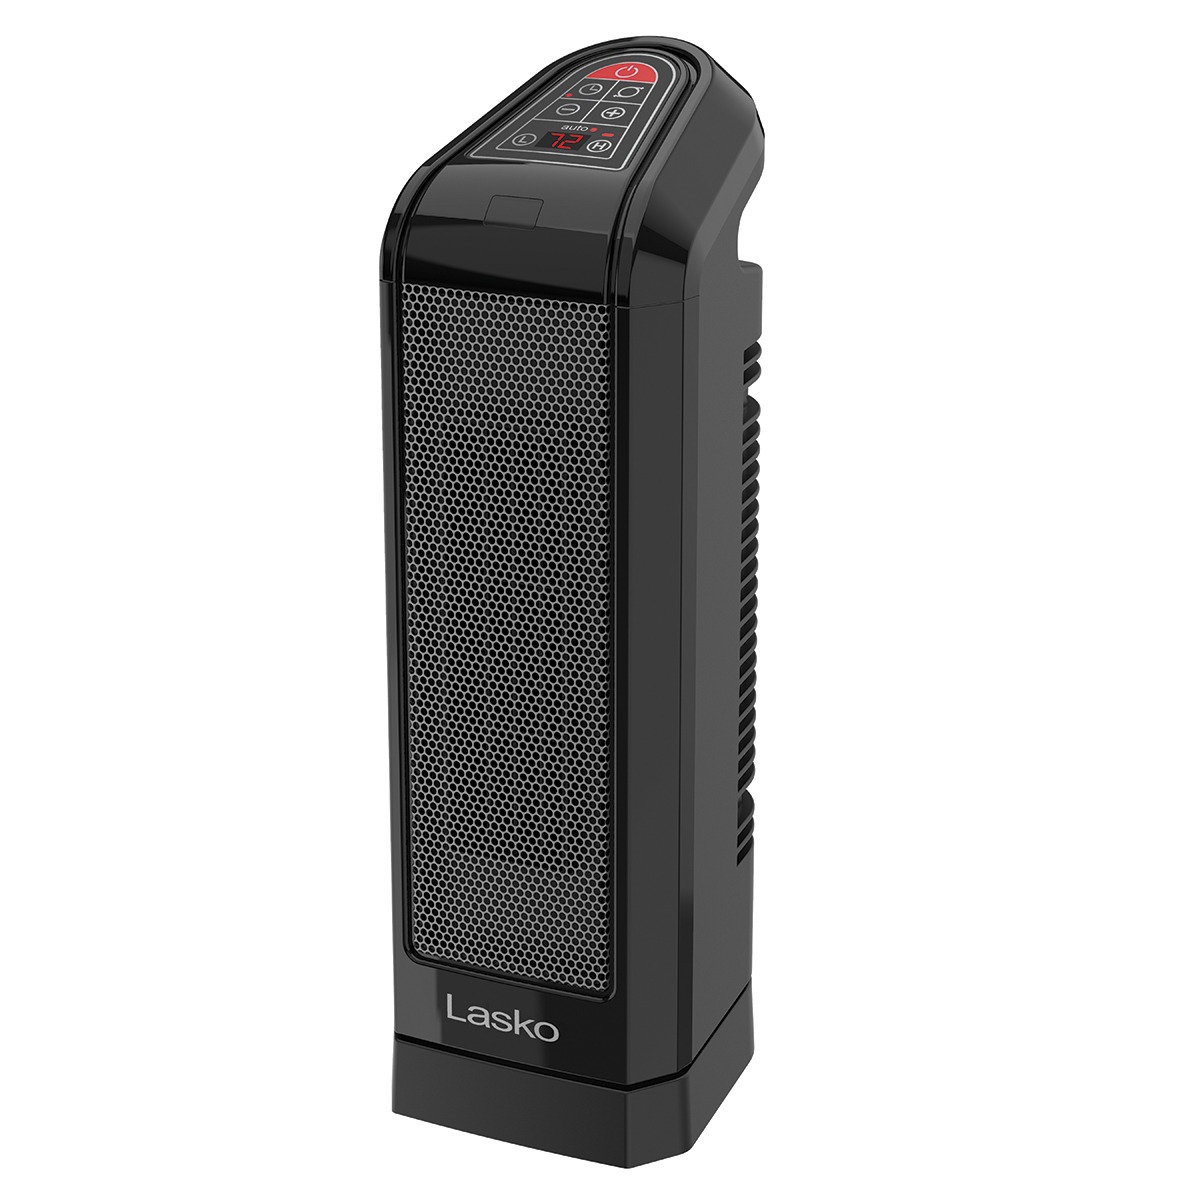 Lasko Digital Ceramic Tower Heater with Remote Control Model CT16658